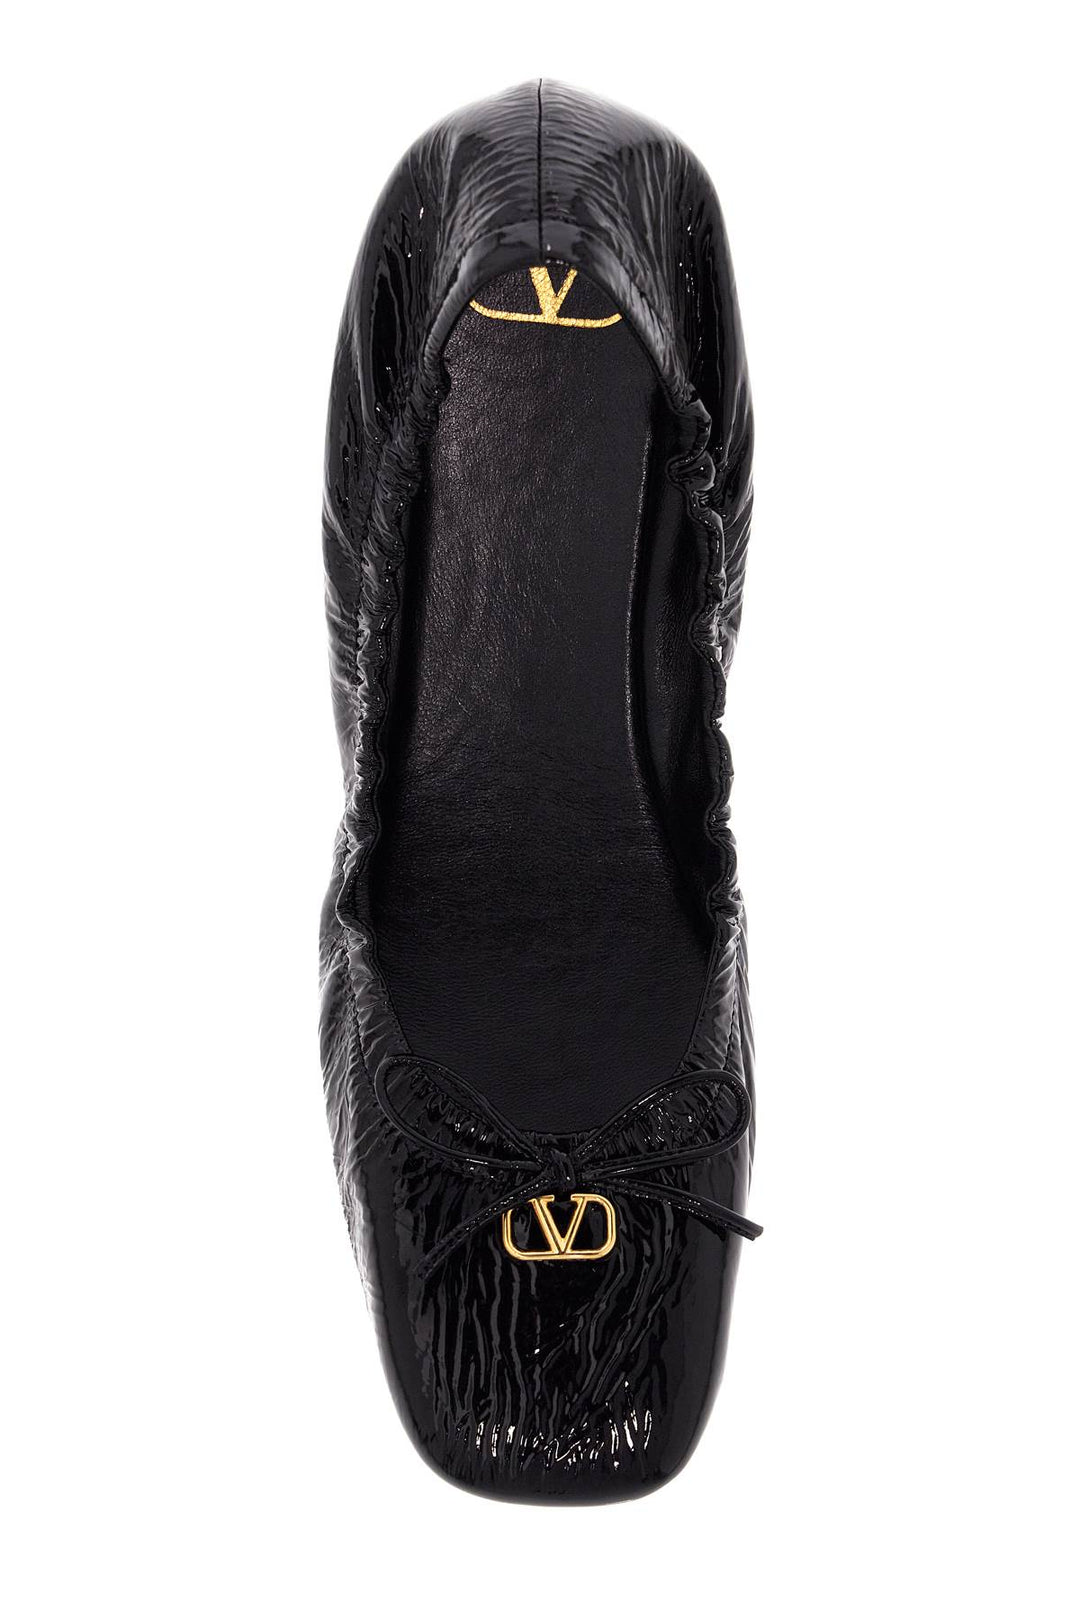 Valentino Garavani Vlogo Signature Patent Leather Baller   Black